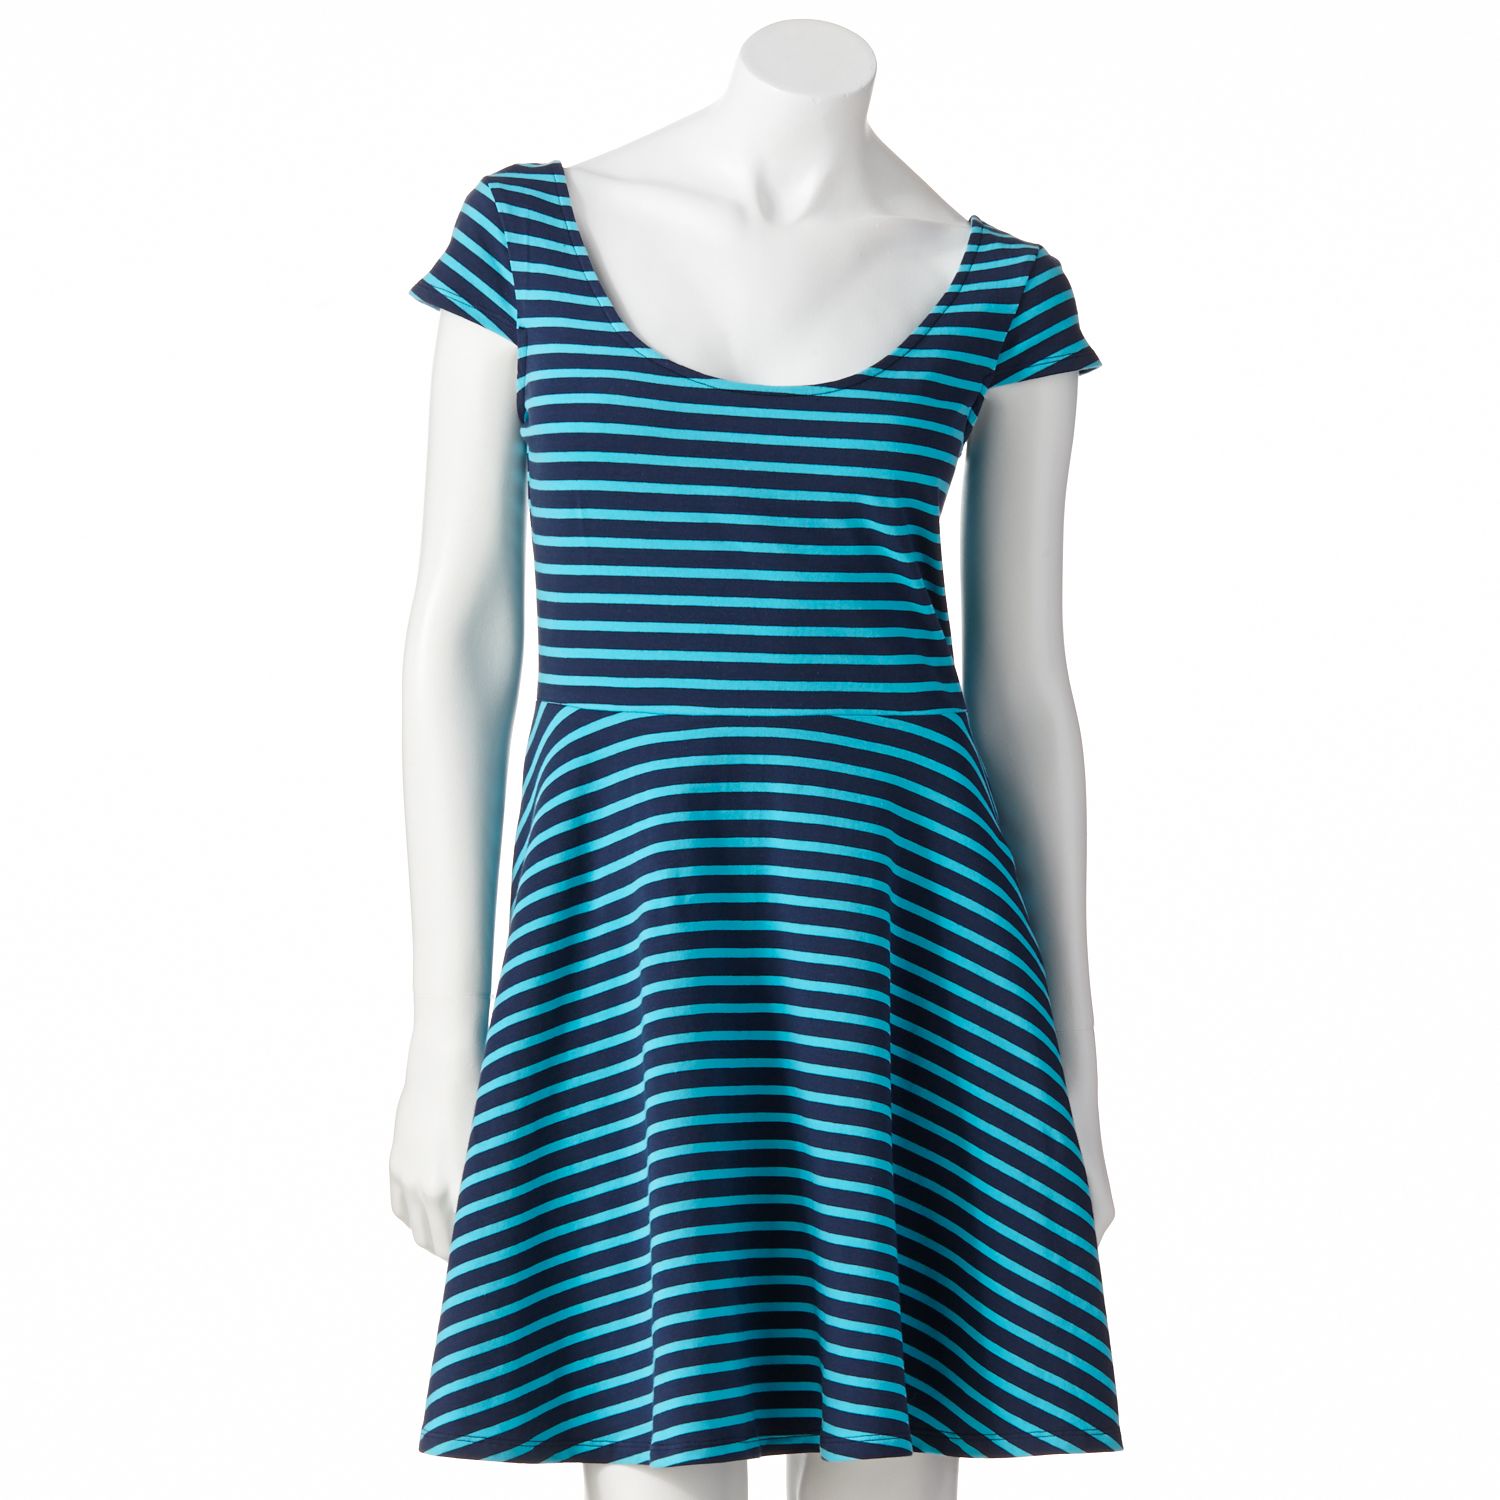 lauren conrad striped dress